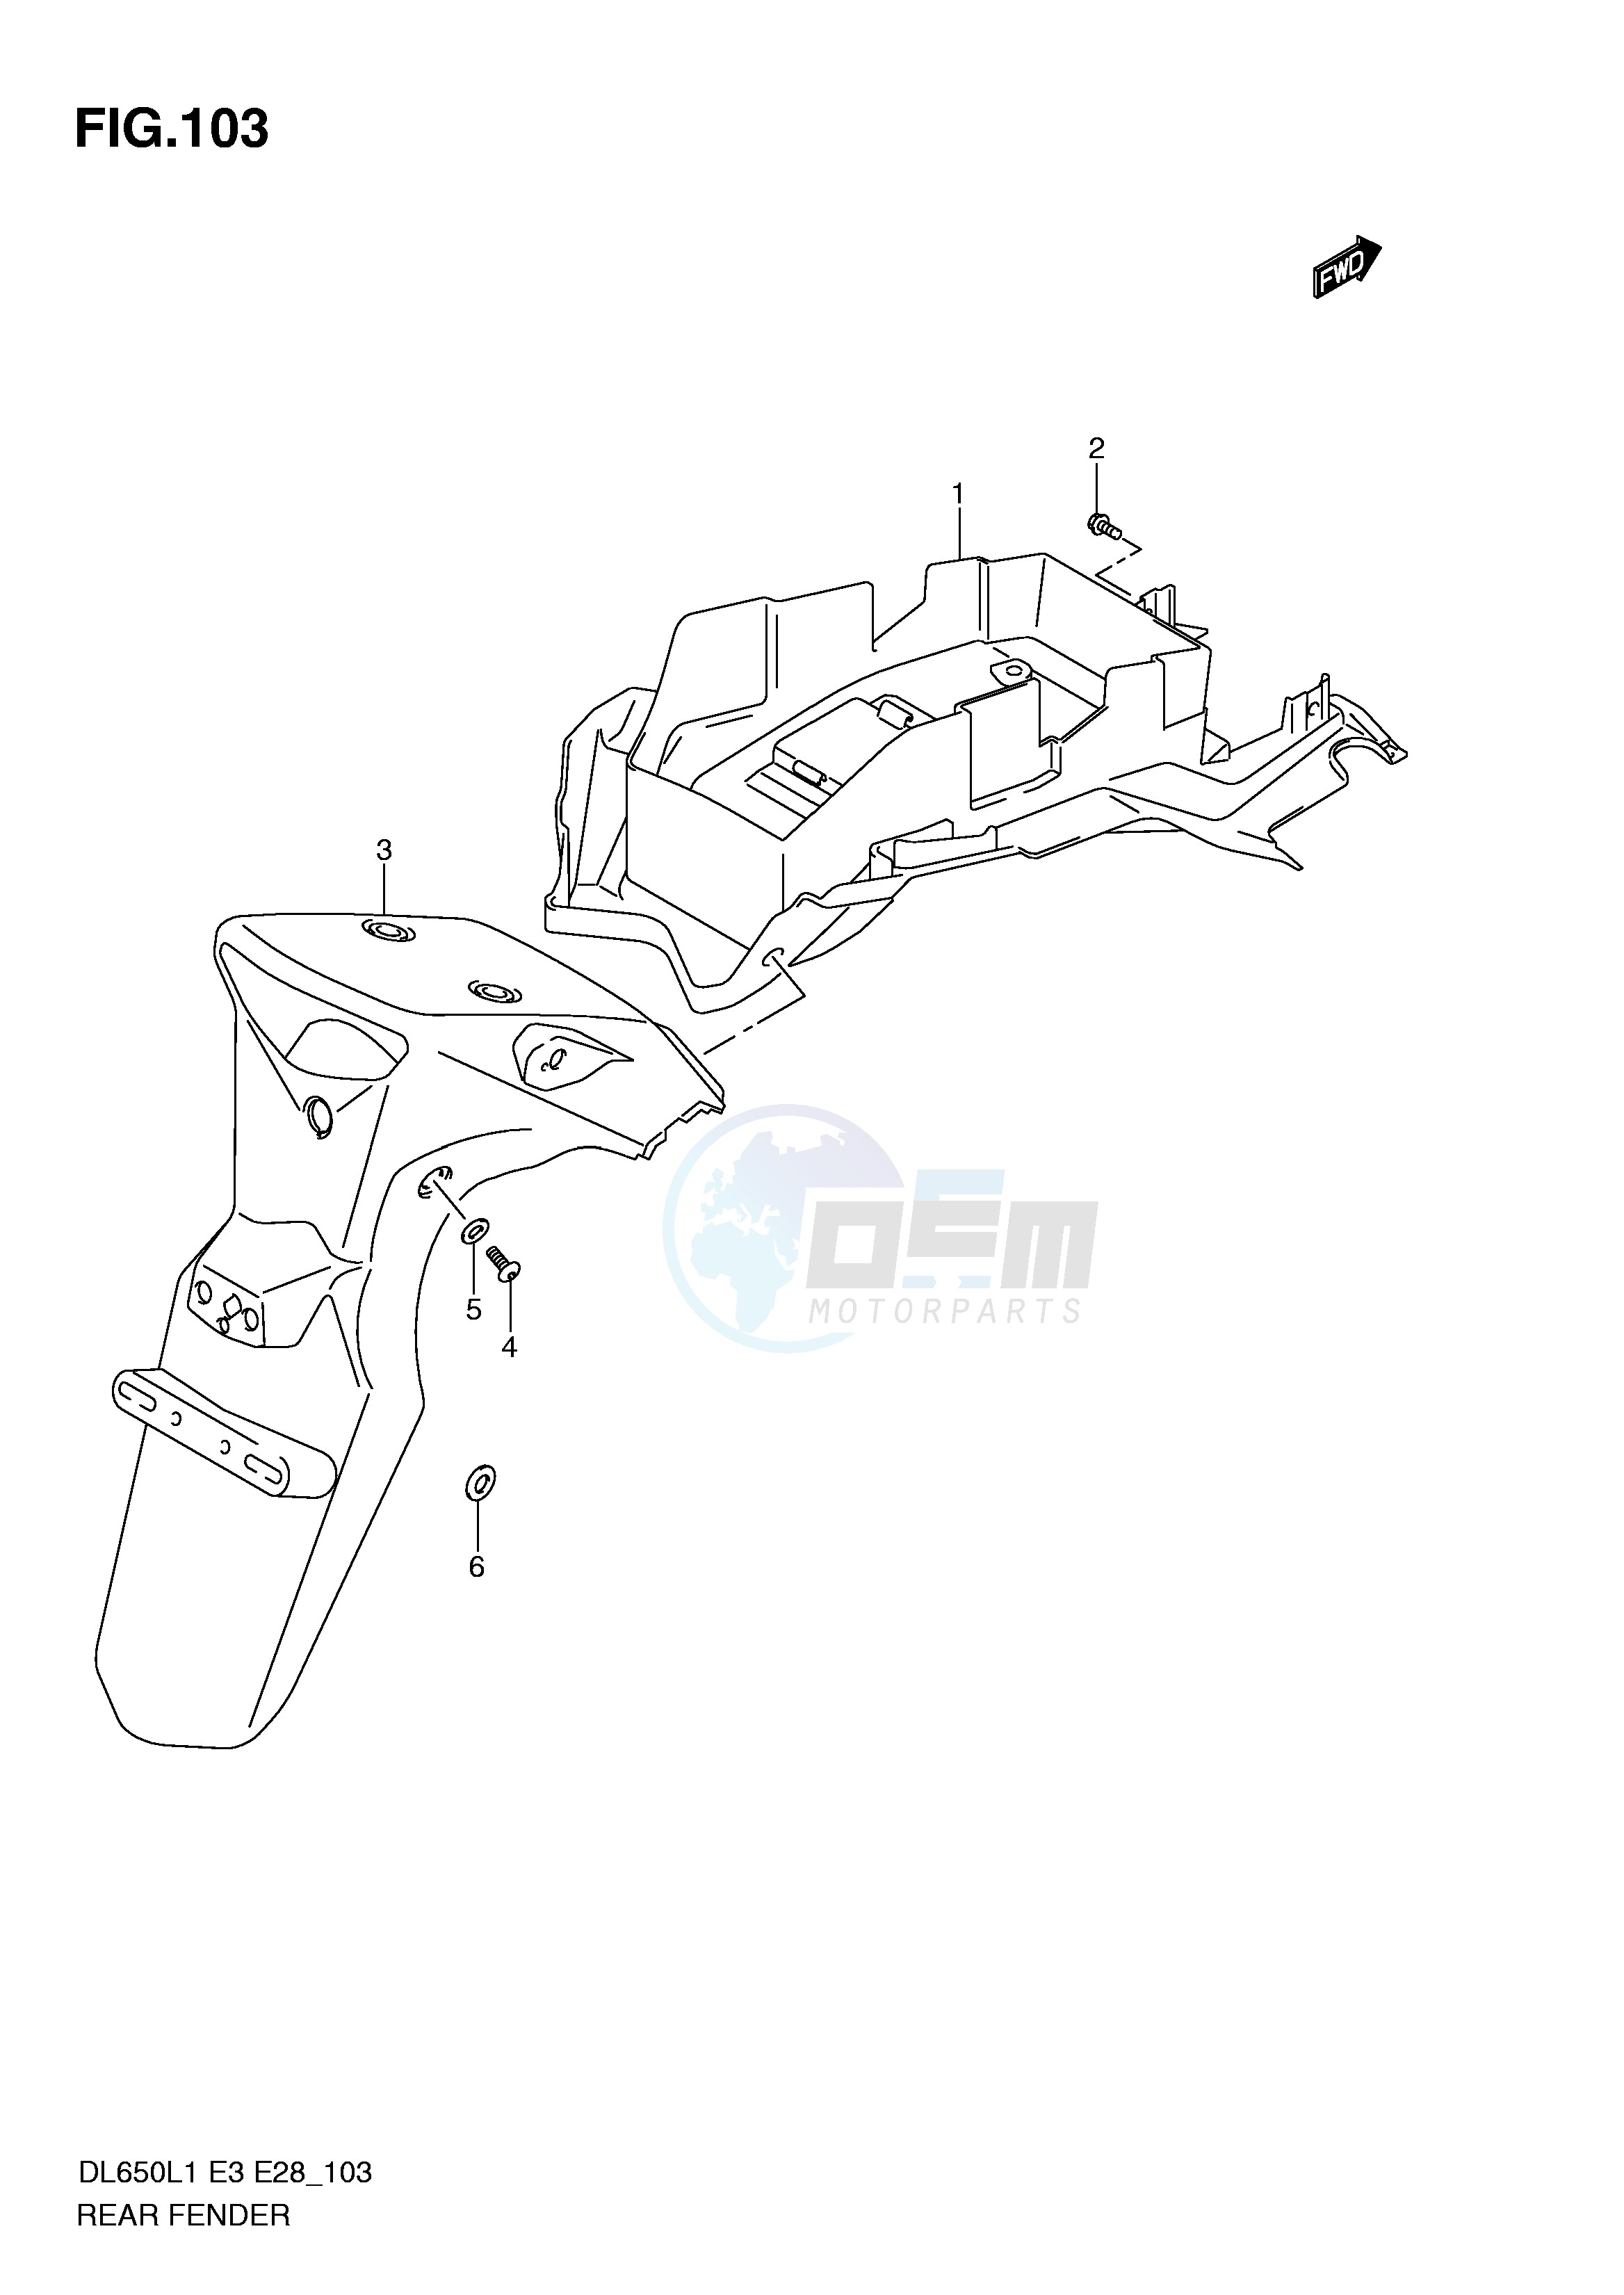 REAR FENDER (DL650AL1 E33) blueprint